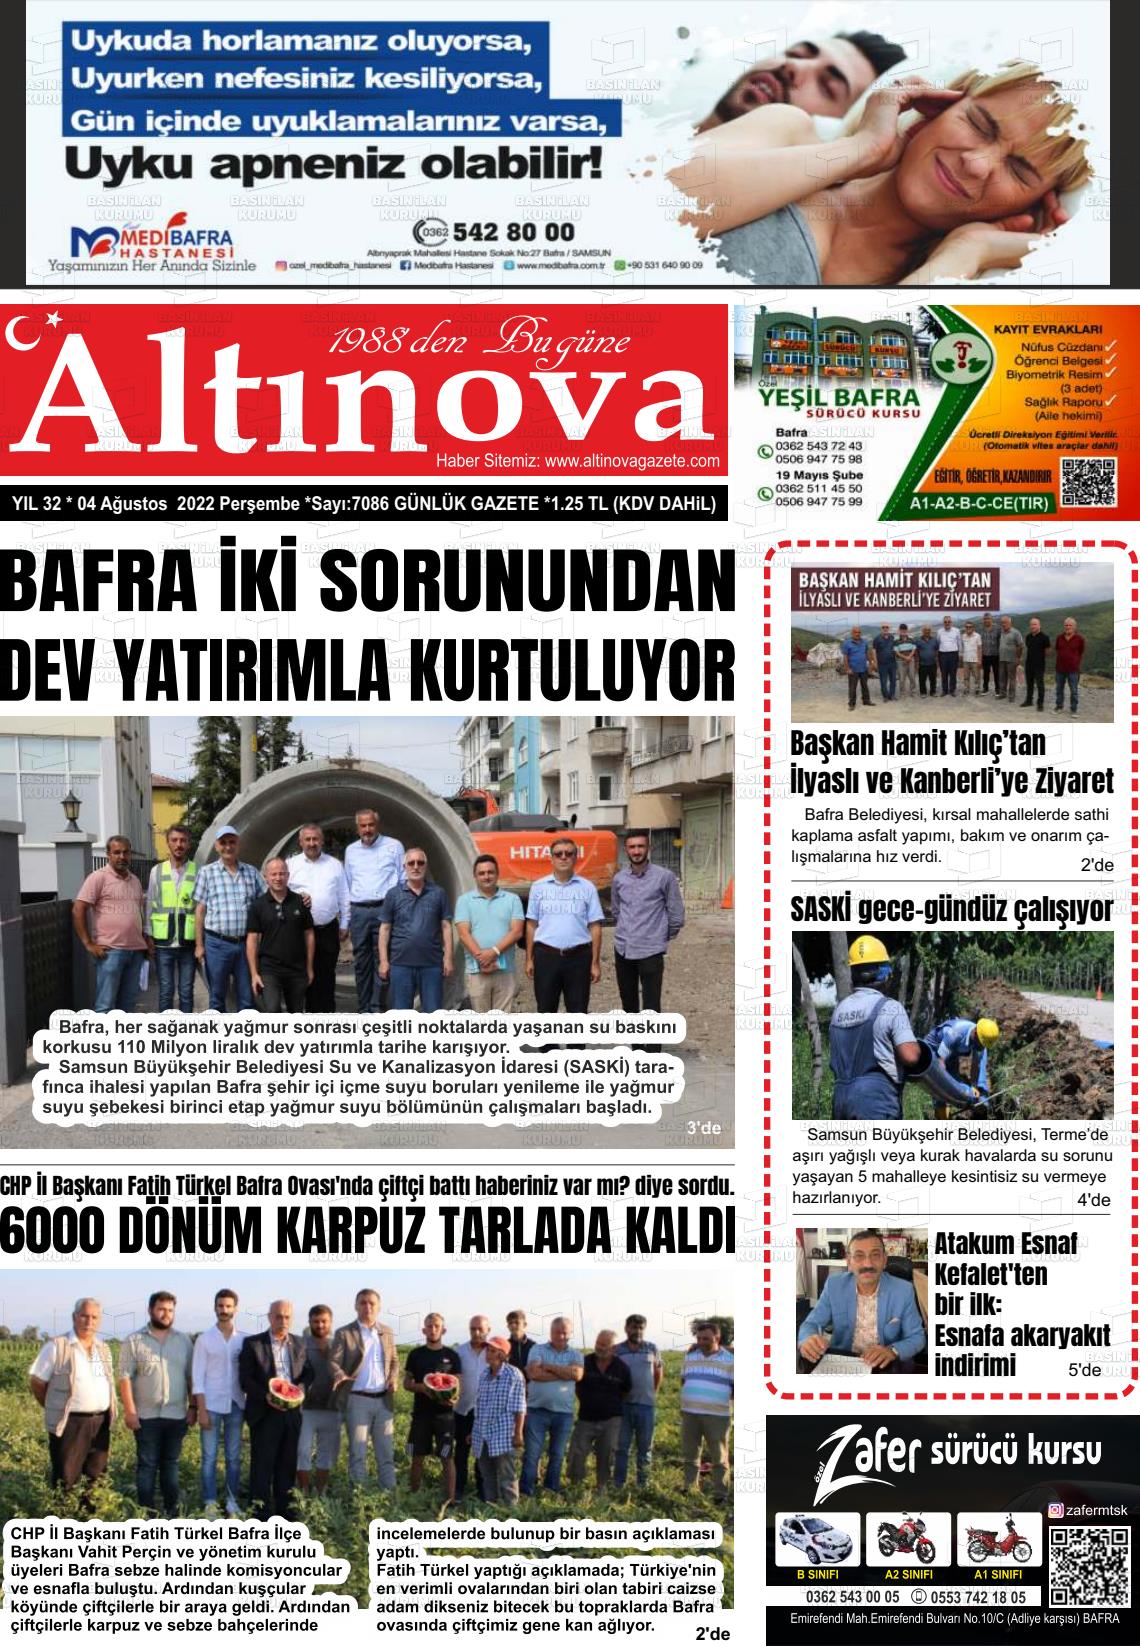 04 Ağustos 2022 Altınova Gazete Manşeti